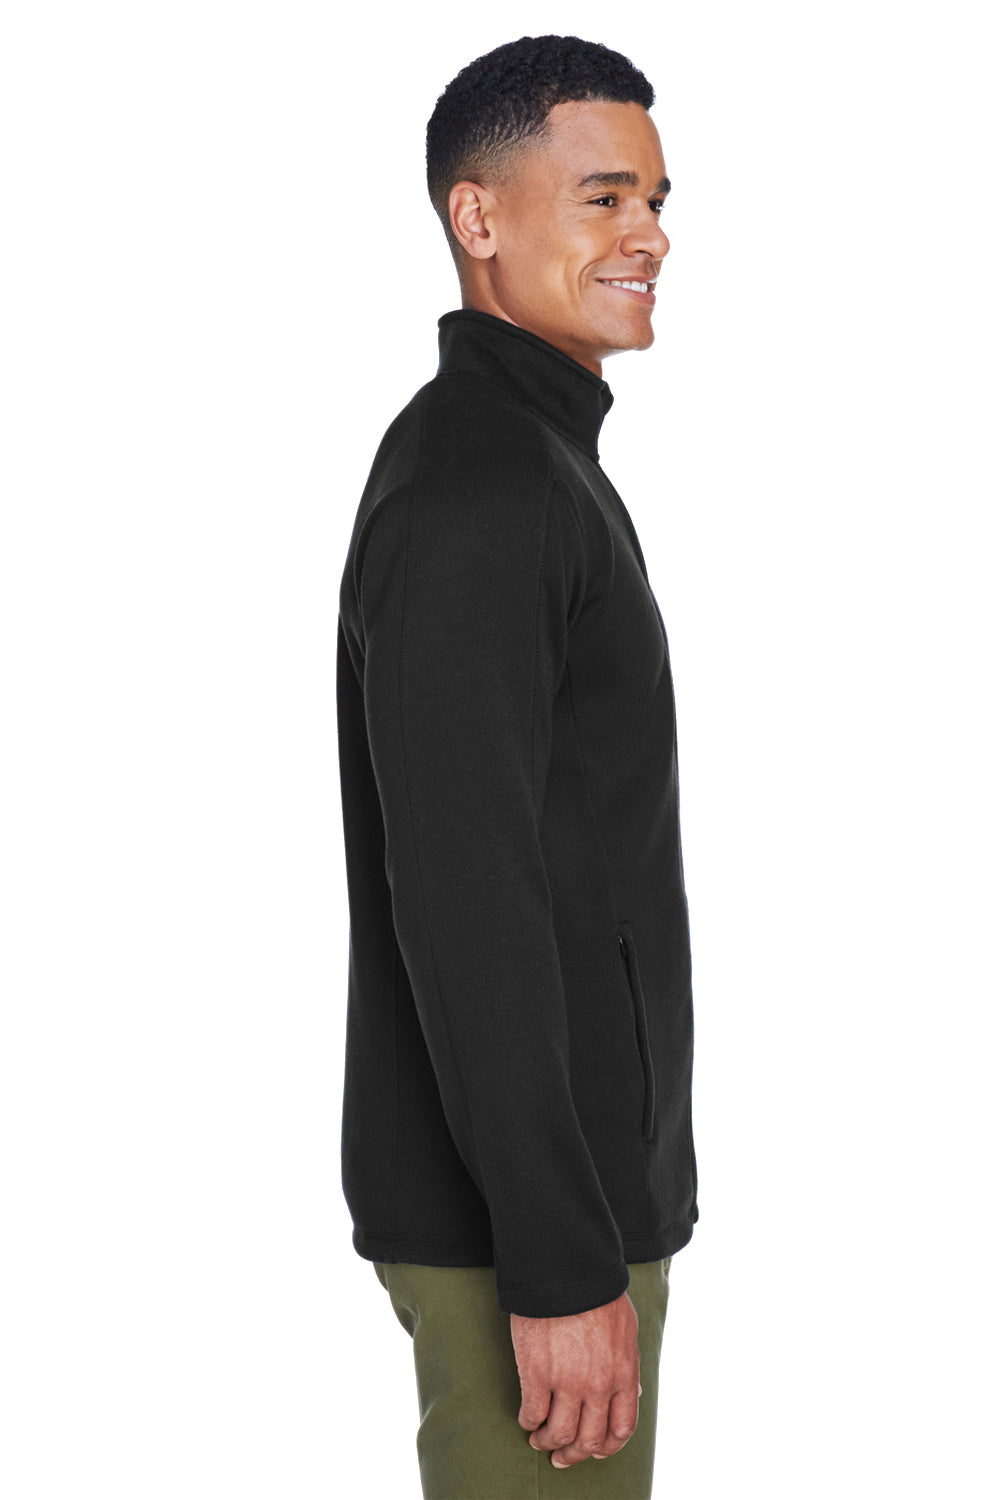 Devon & Jones DG793 Mens Bristol Full Zip Sweater Fleece Jacket Black Side